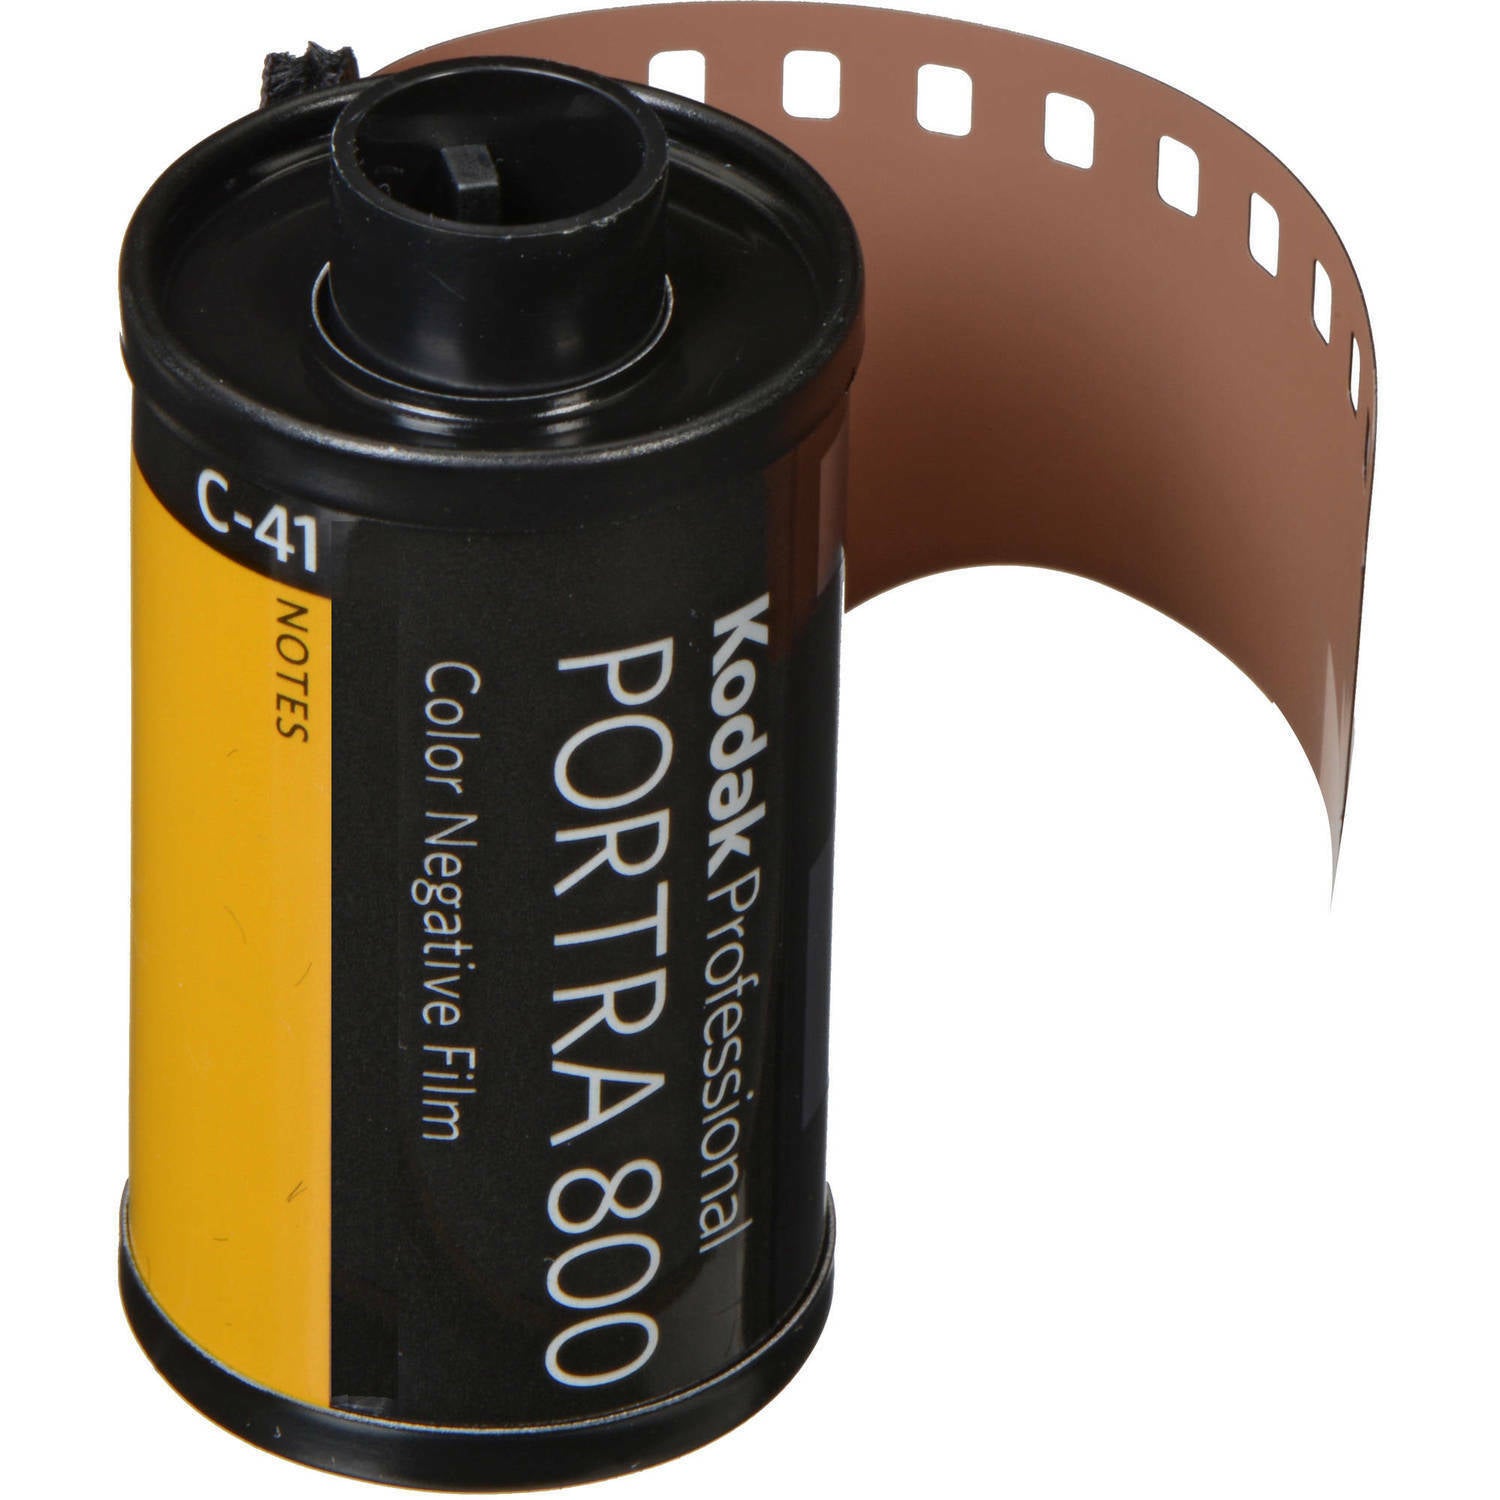 Kodak Portra 800 35mm Colour Negative Film - 36 exposures